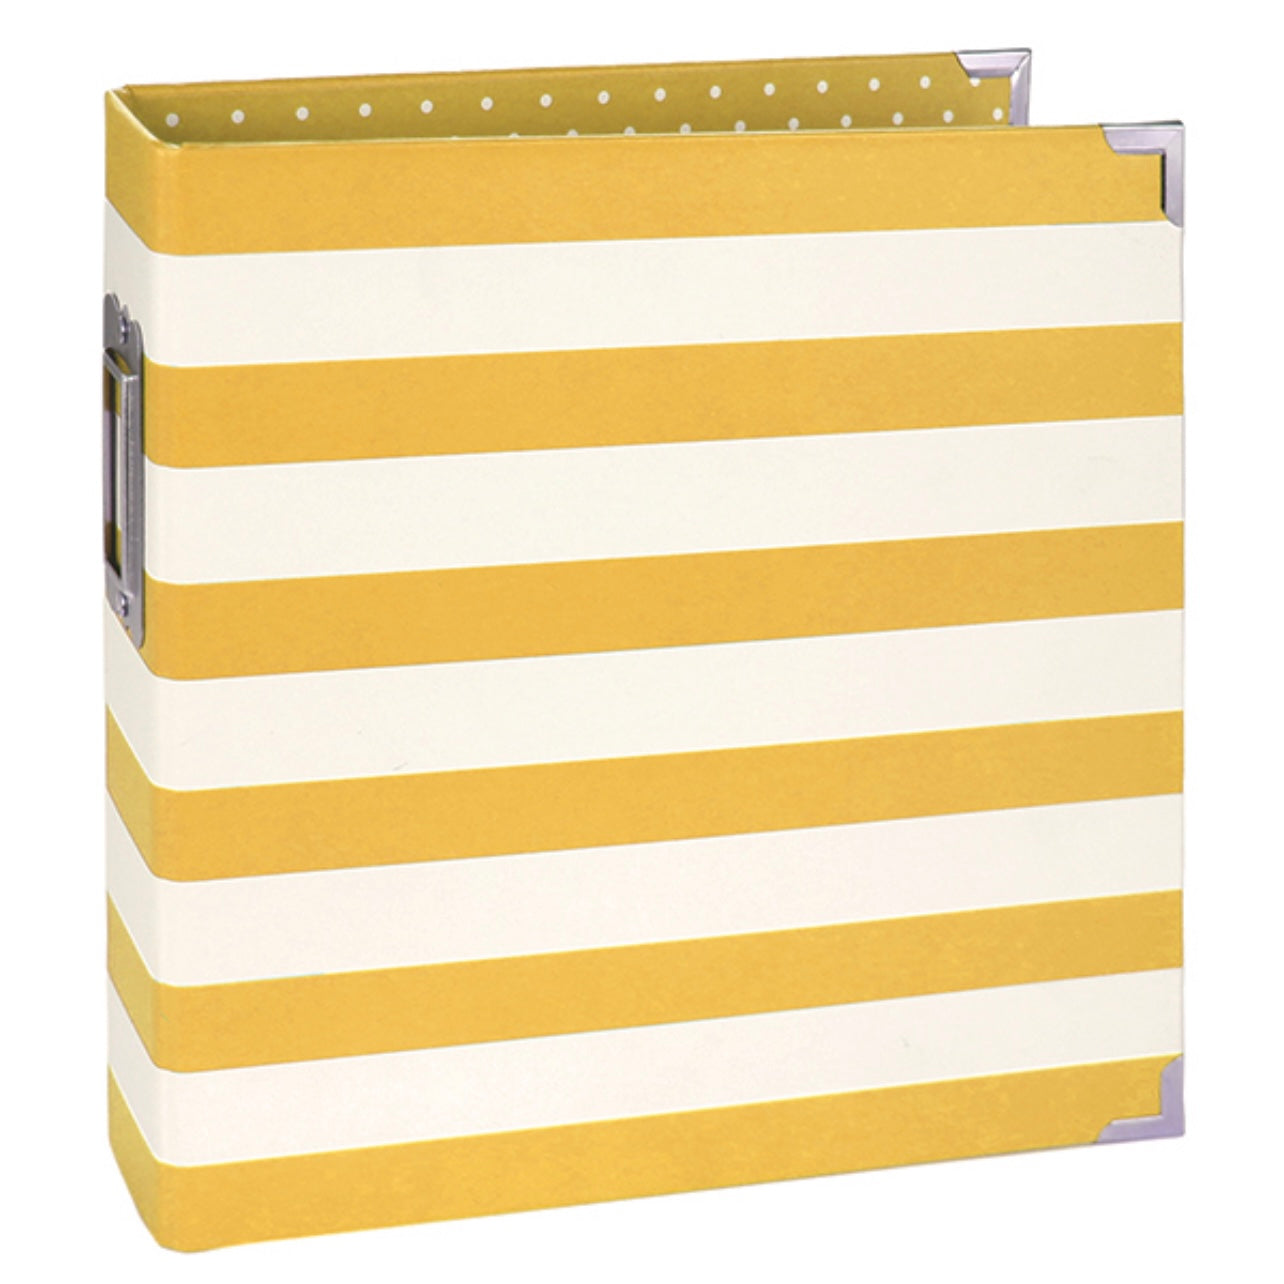 6 x 8” SNAP Album - Yellow Stripe